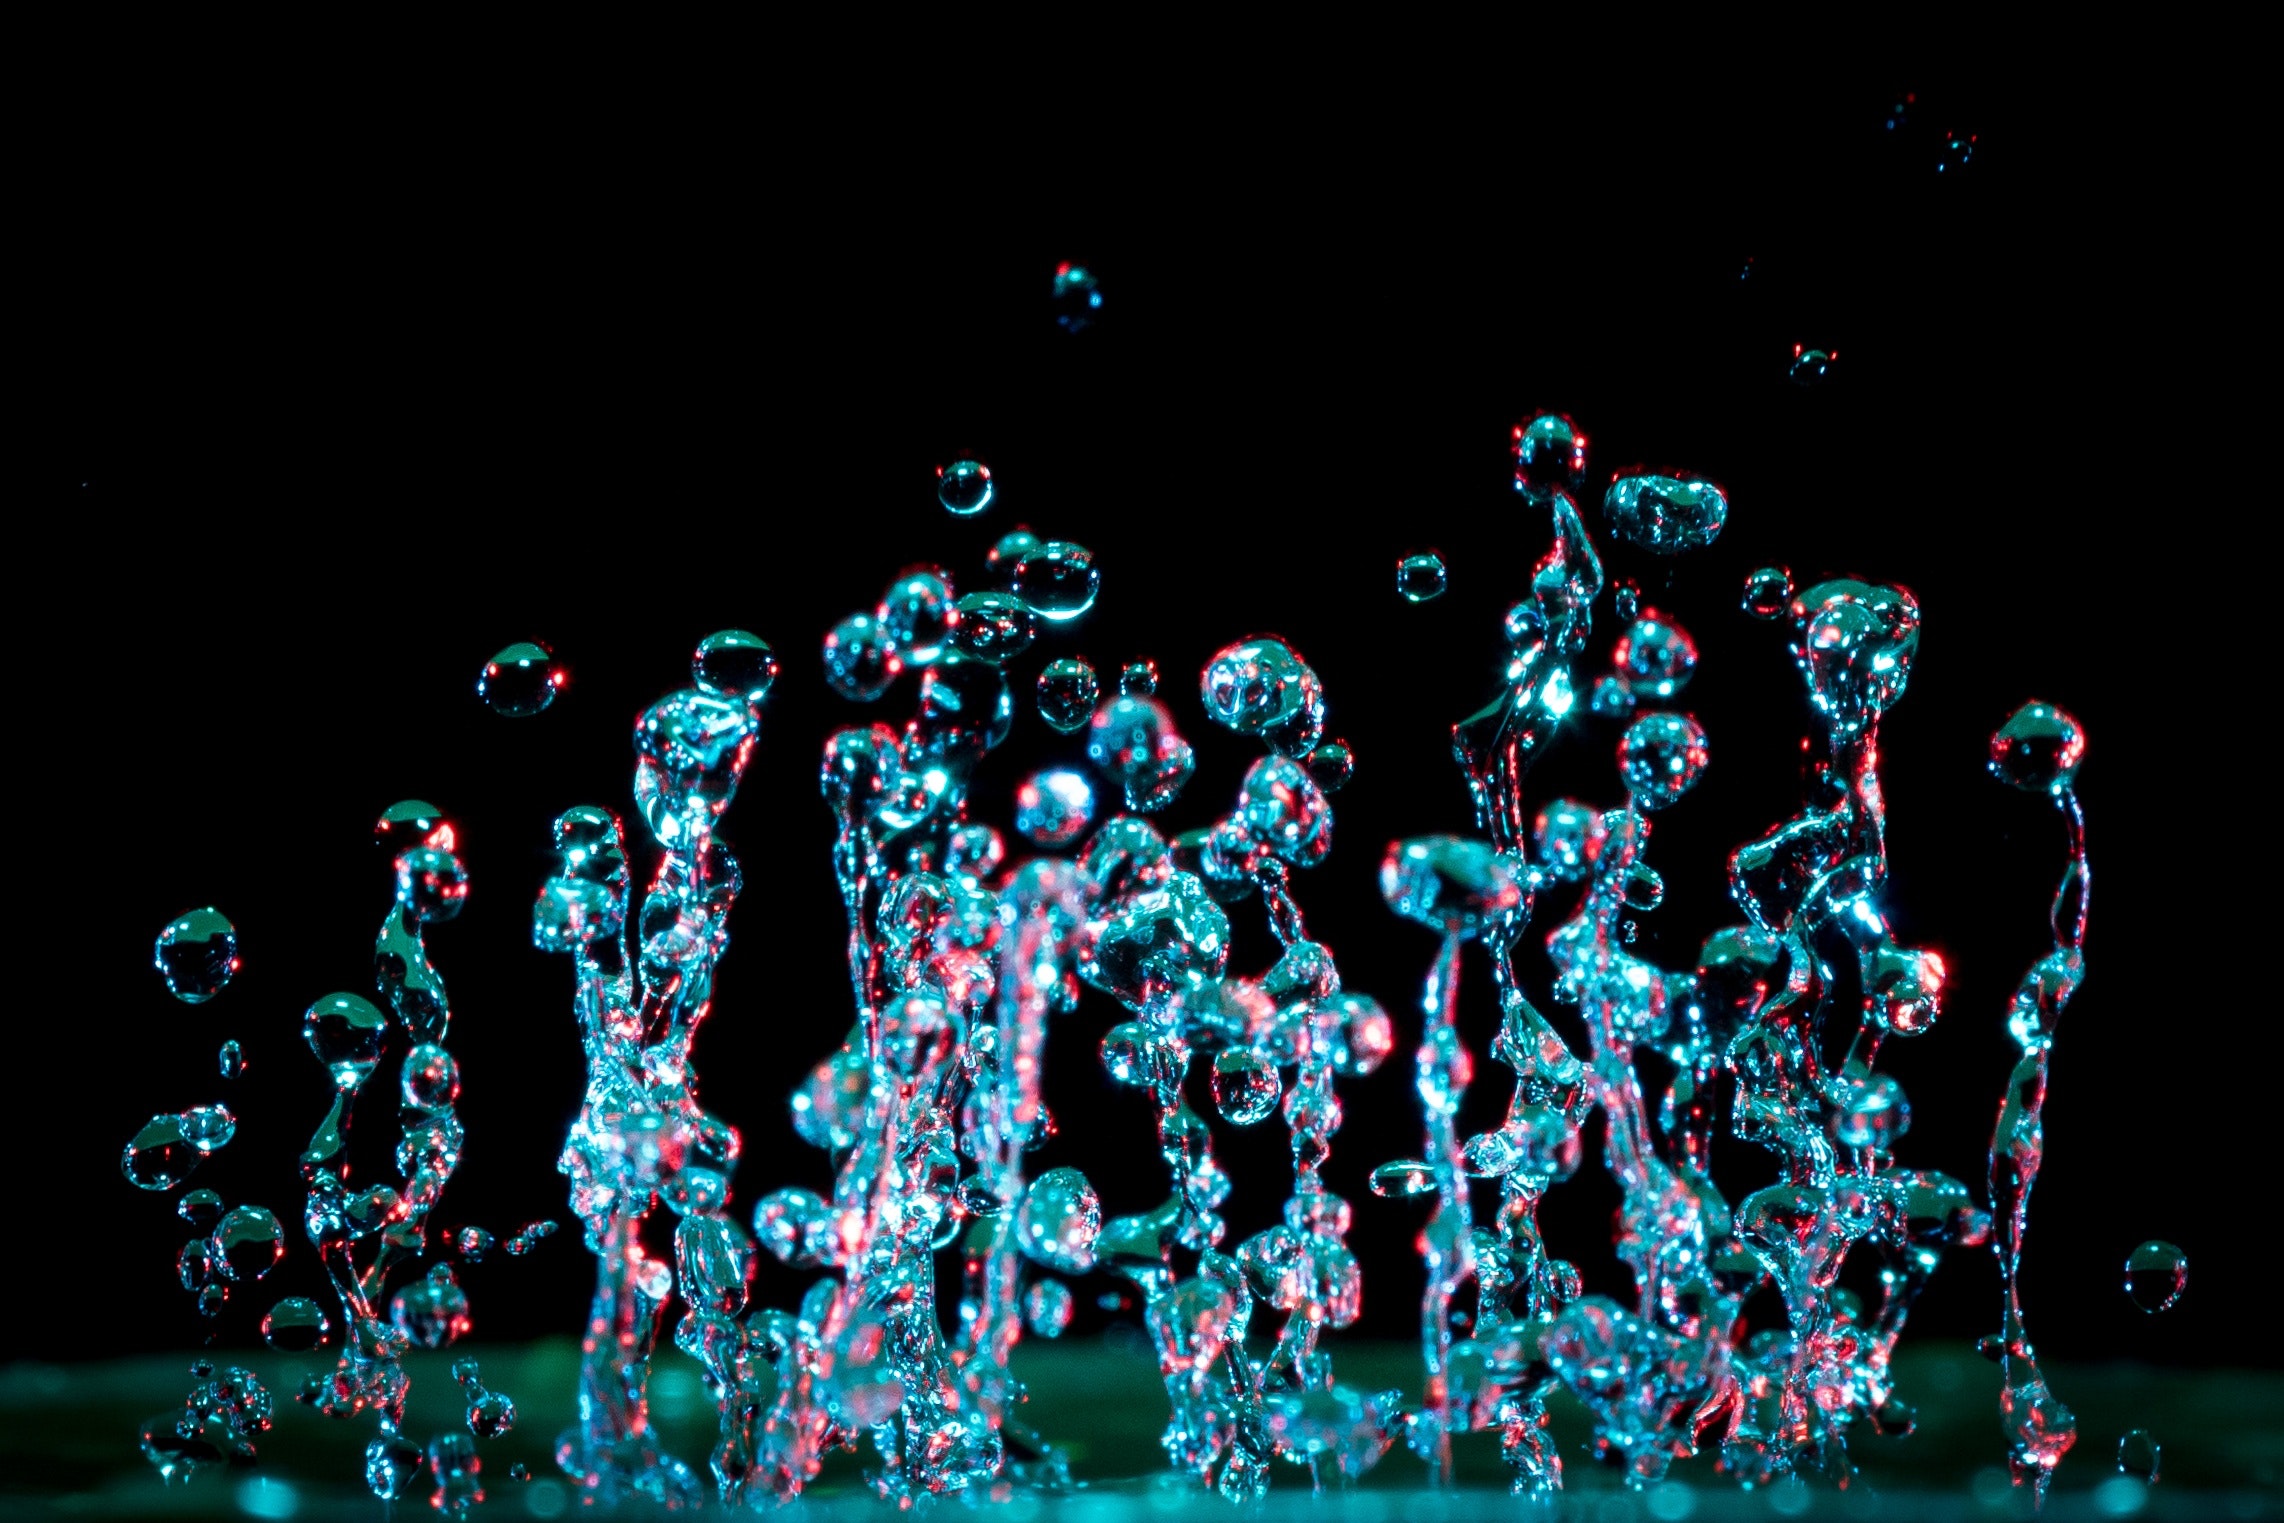 Bubbles splashing up 